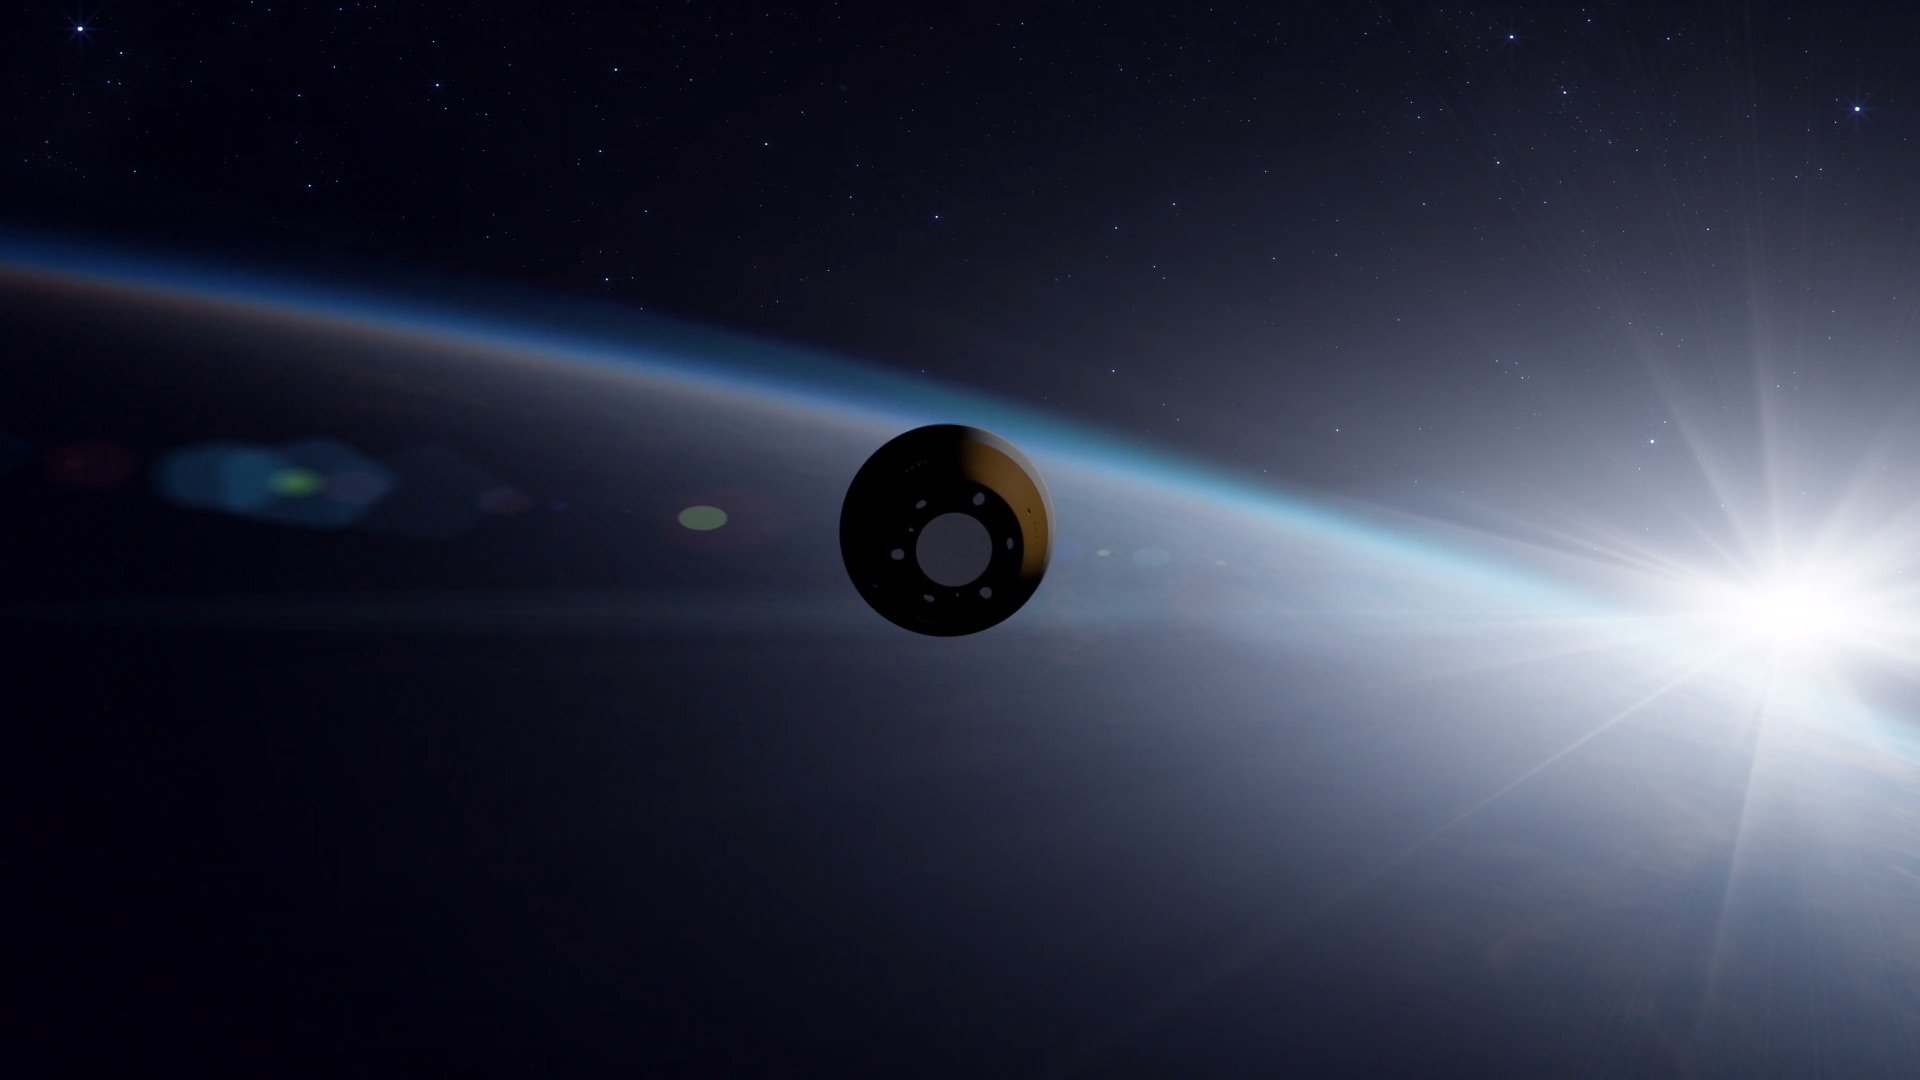 Sample capsule approaching Earth.